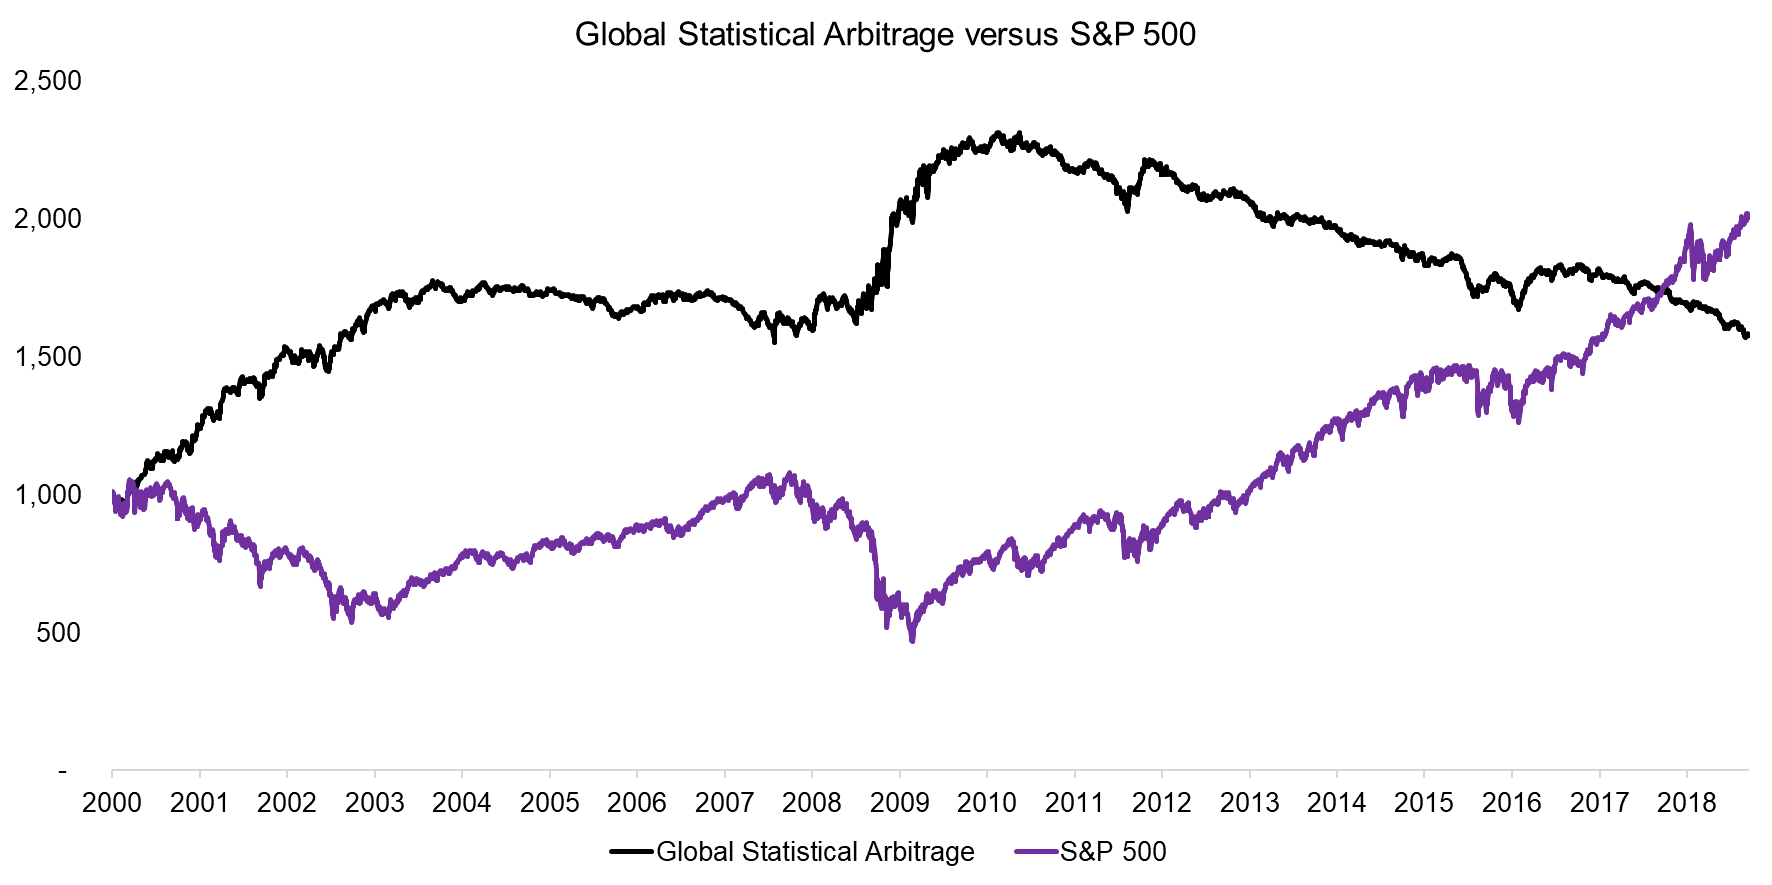 Global Statistical Arbitrage versus S&P 500